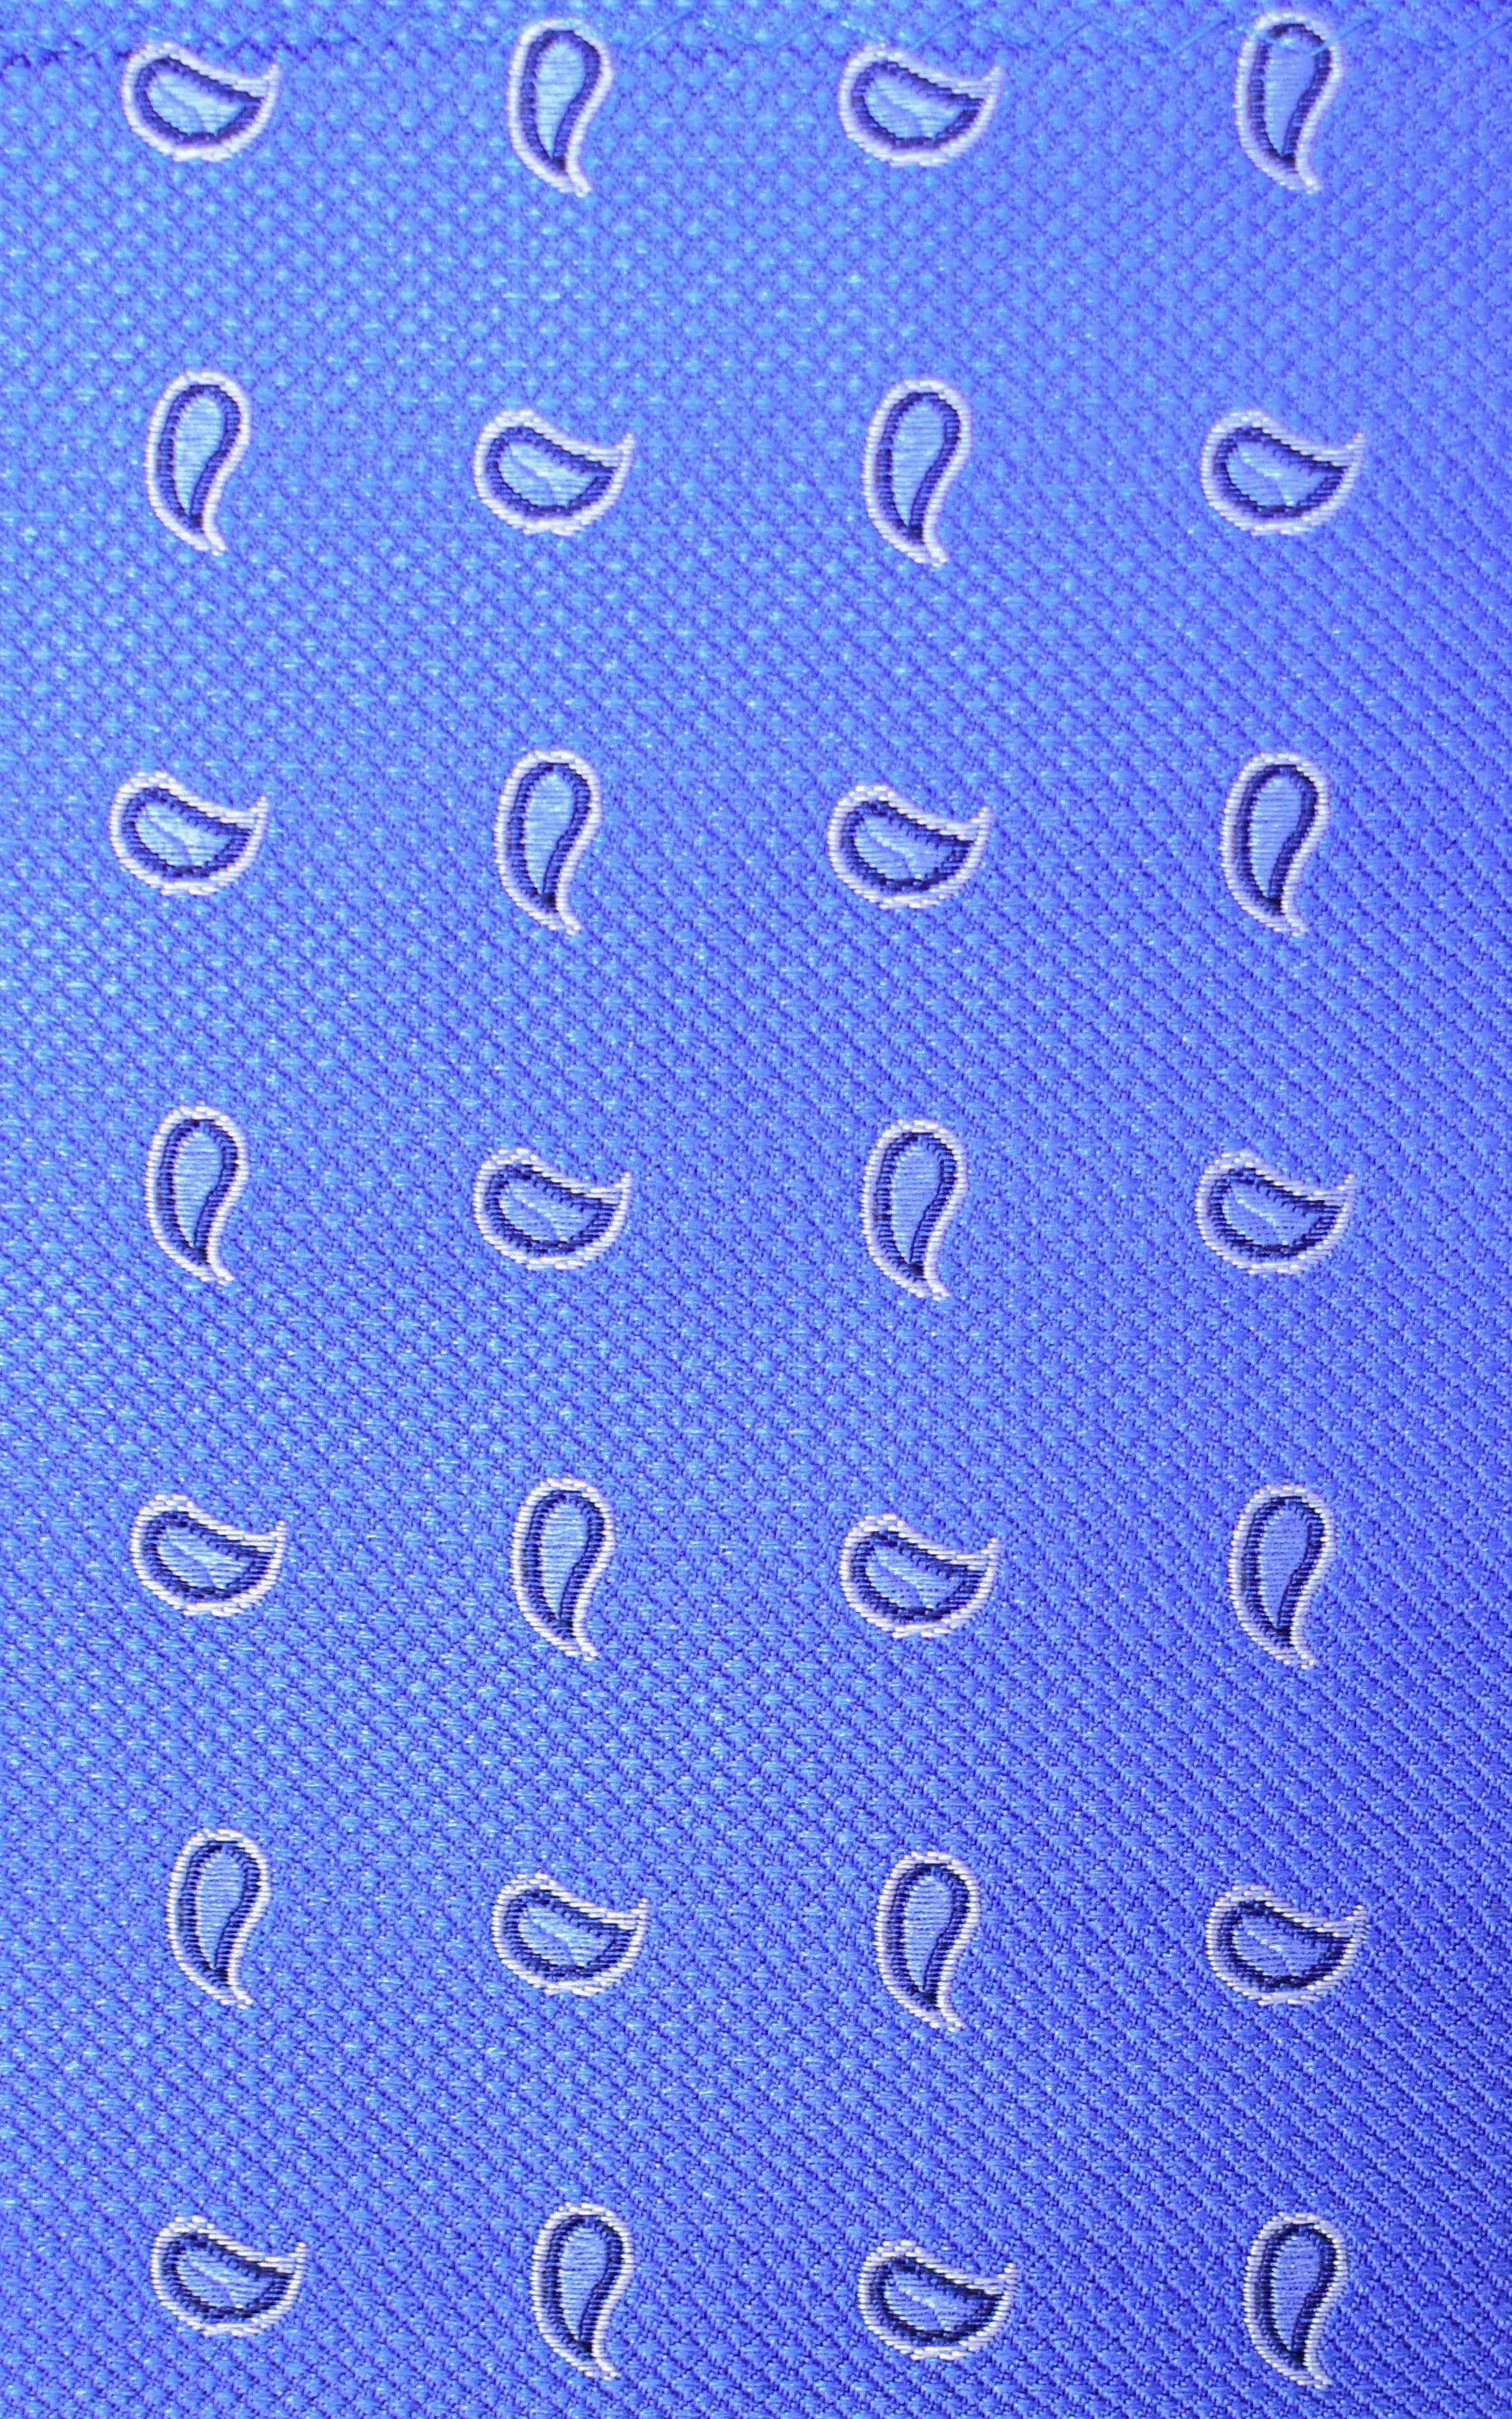 Knightsbridge Neckwear Paisley Silk Tie - Blue From Woven Durham